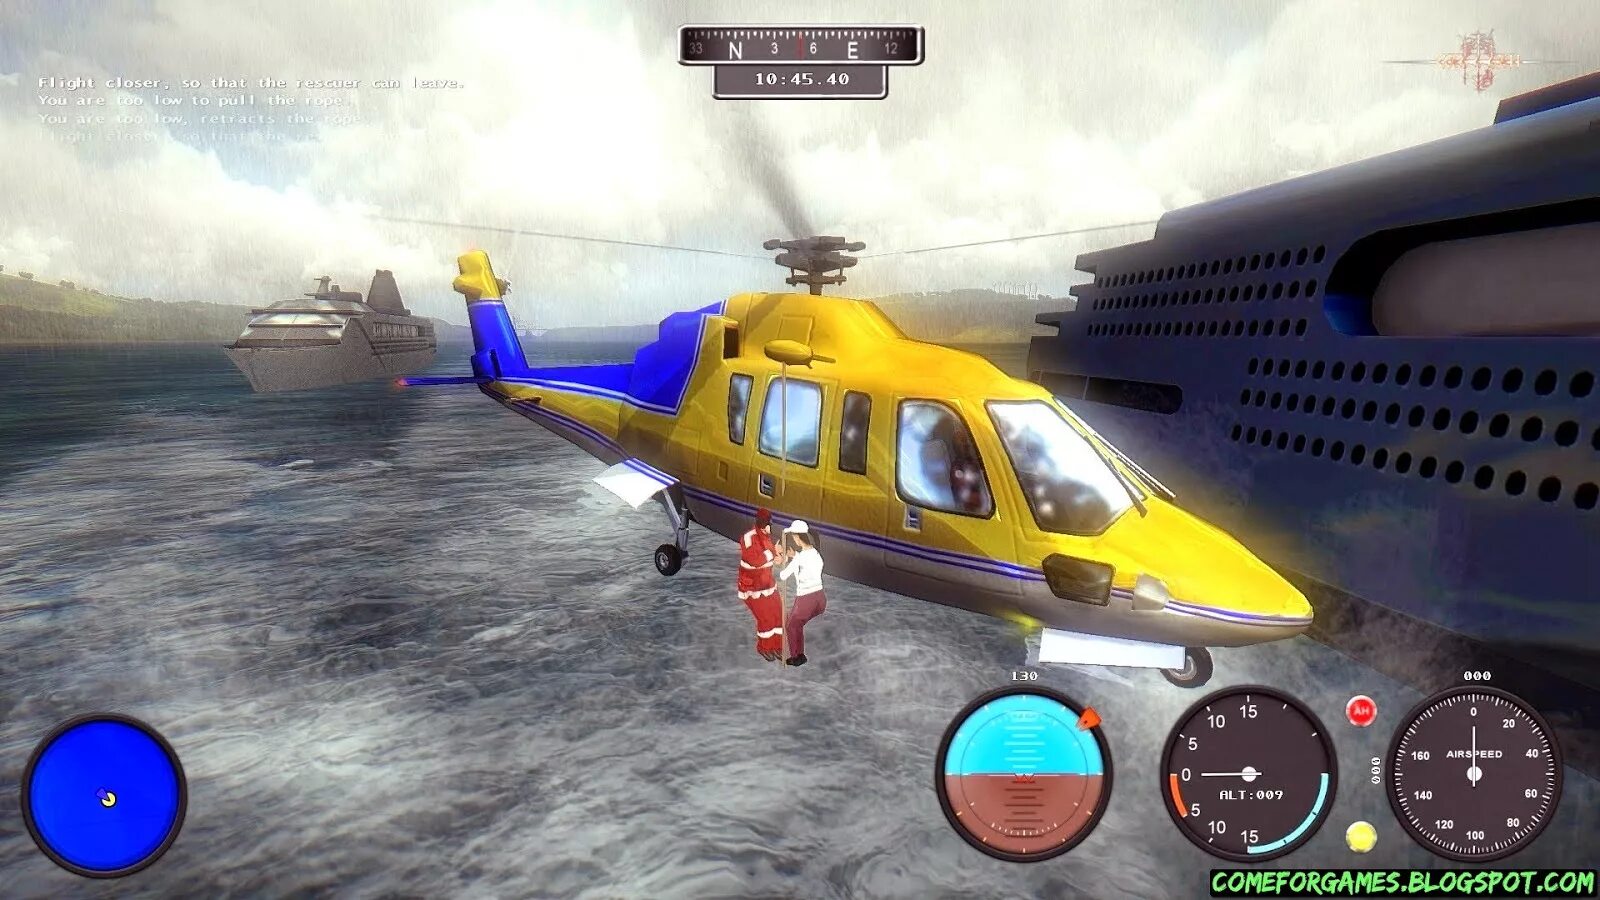 Helicopter игра. Вертолет симулятор с4. Игра Helicopter 1998. Симулятор search and Rescue. Старые игры вертолеты